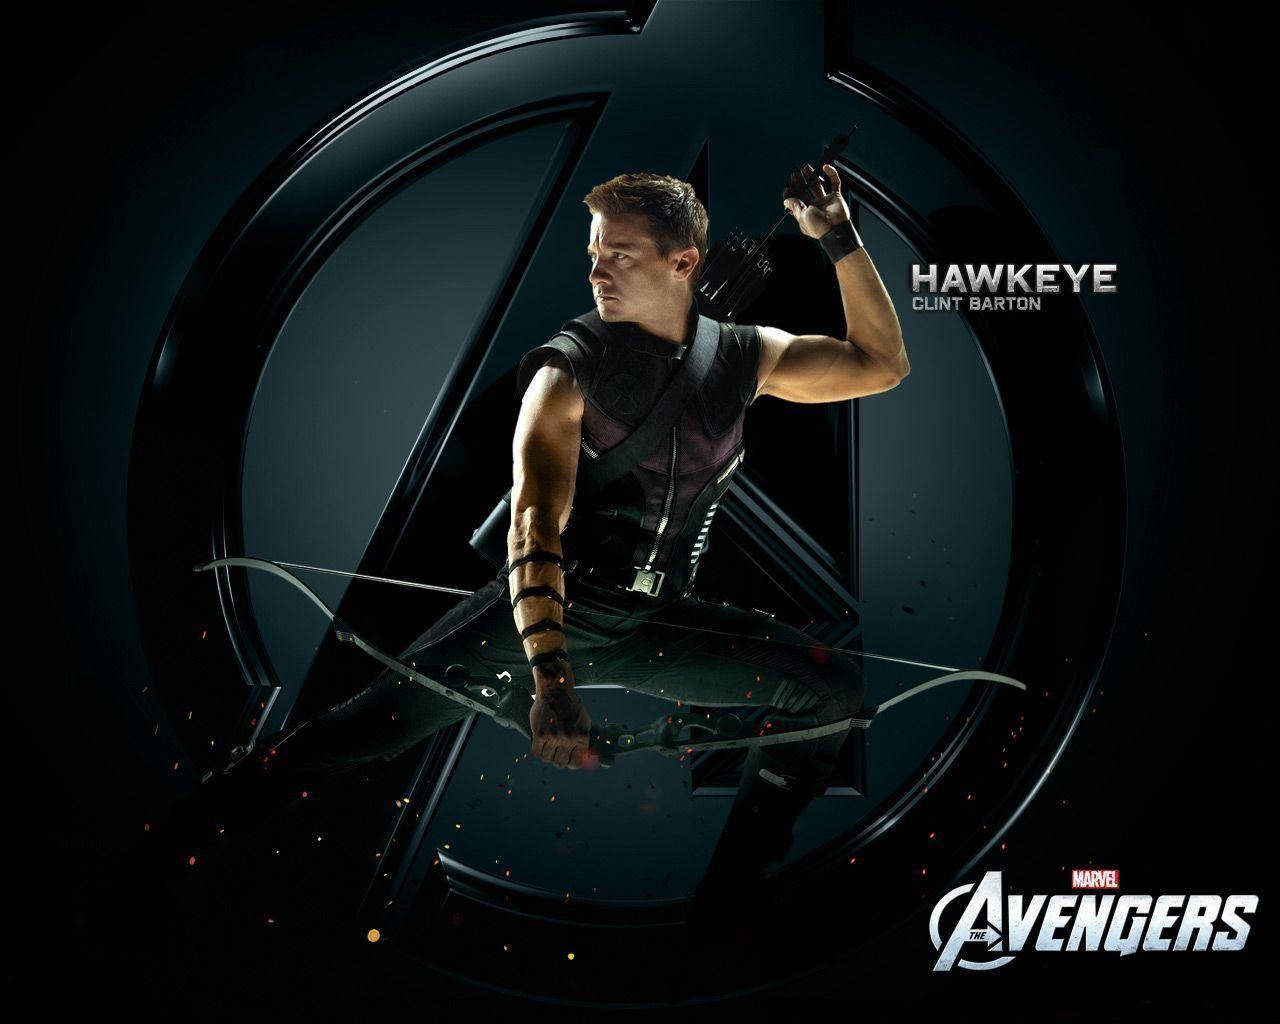 Avengers Hawkeye Clint Barton Background